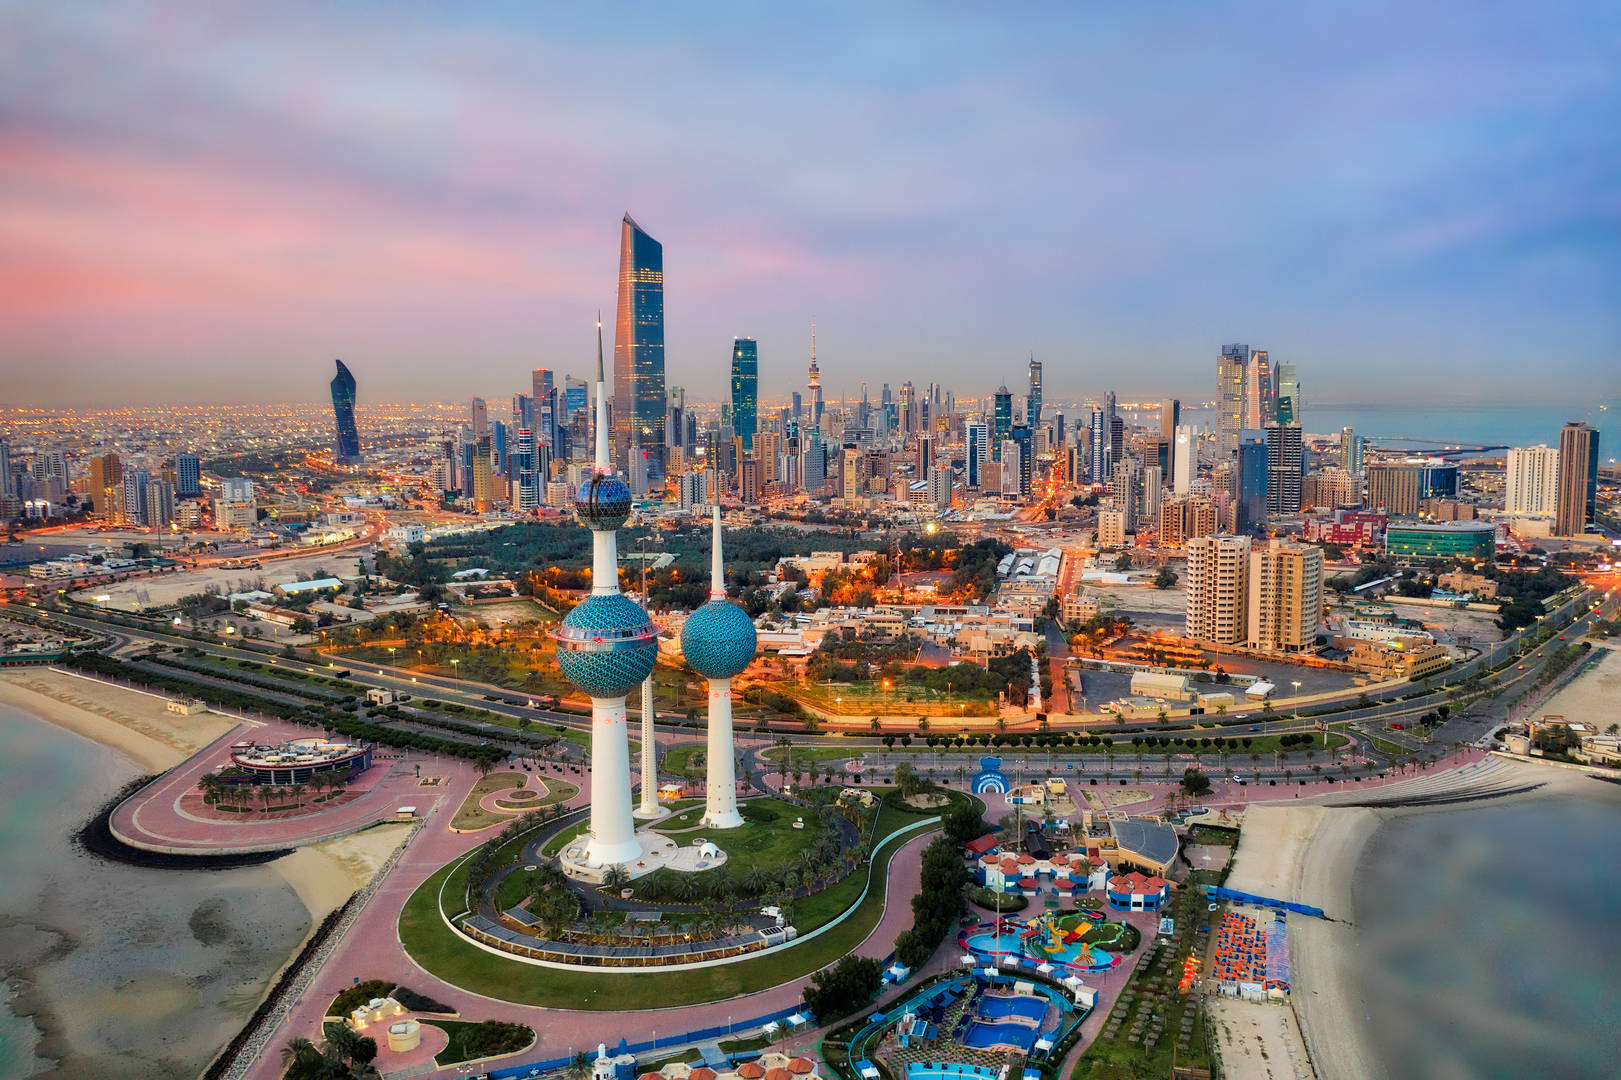 Kuwait's sparkling skyline